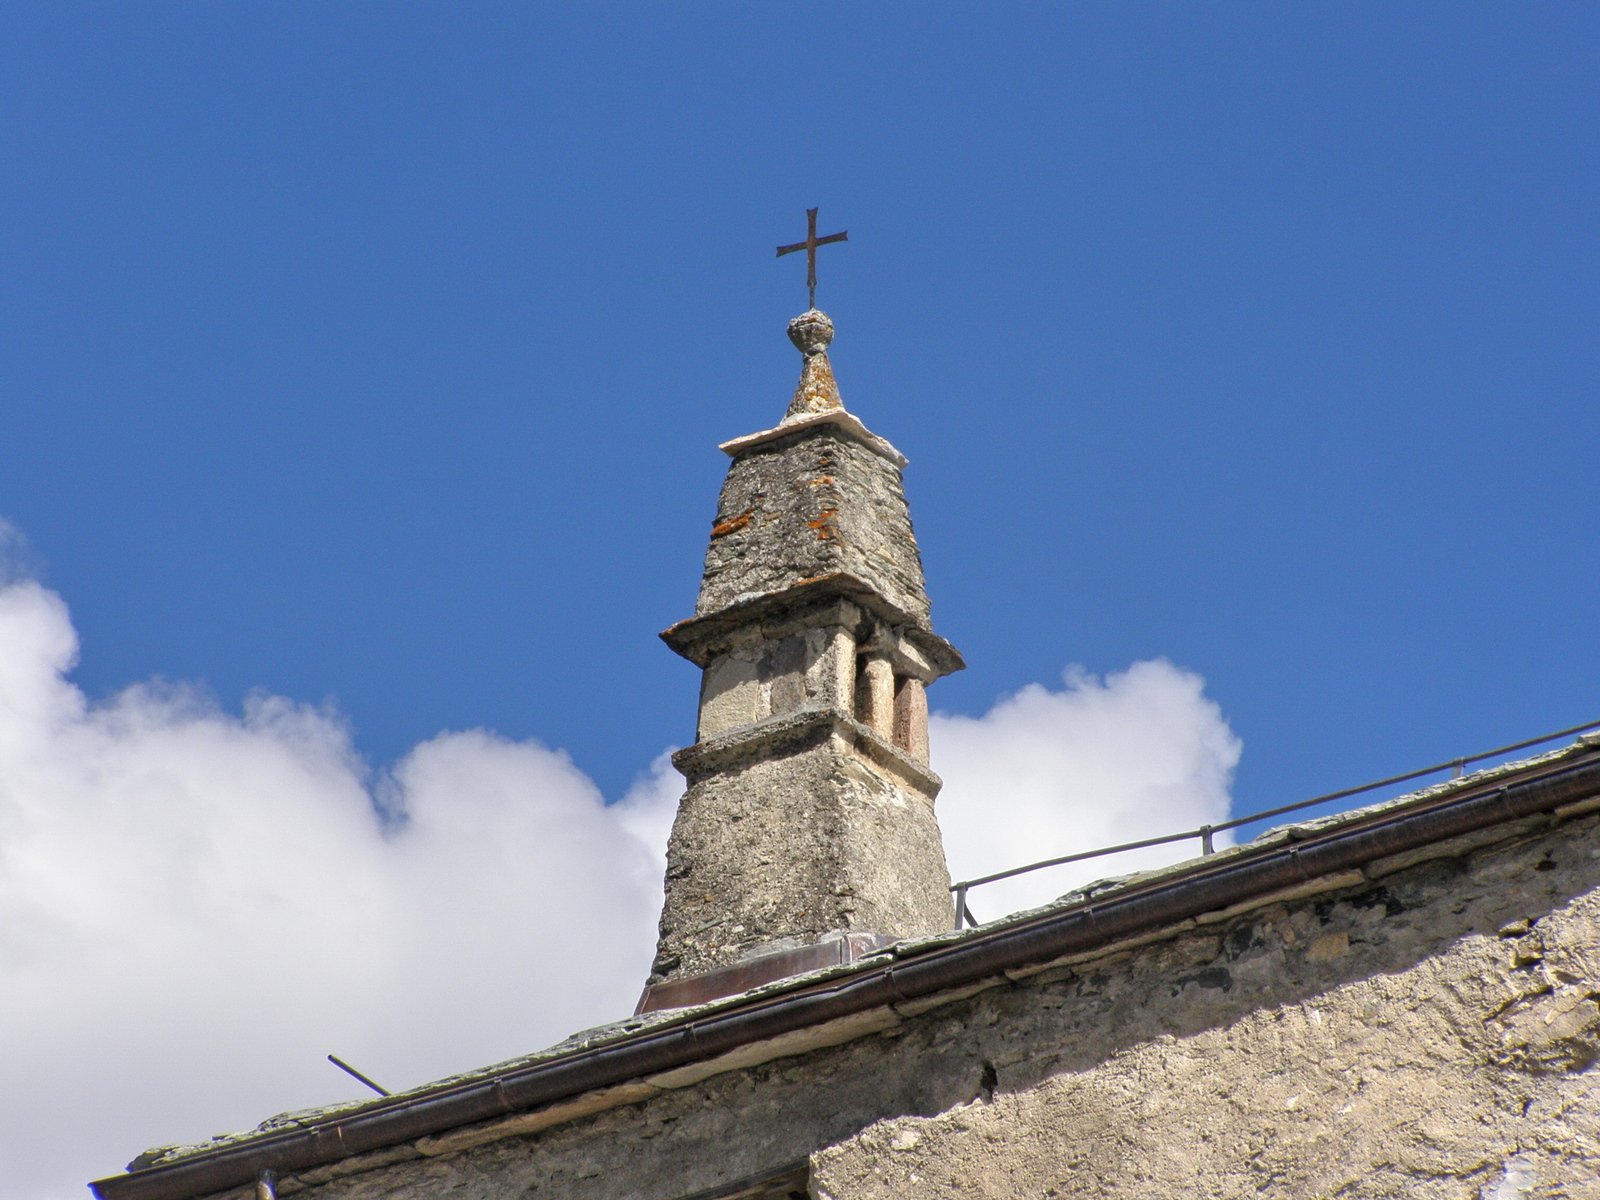 a church steeple with a cross on it, against a blue sky